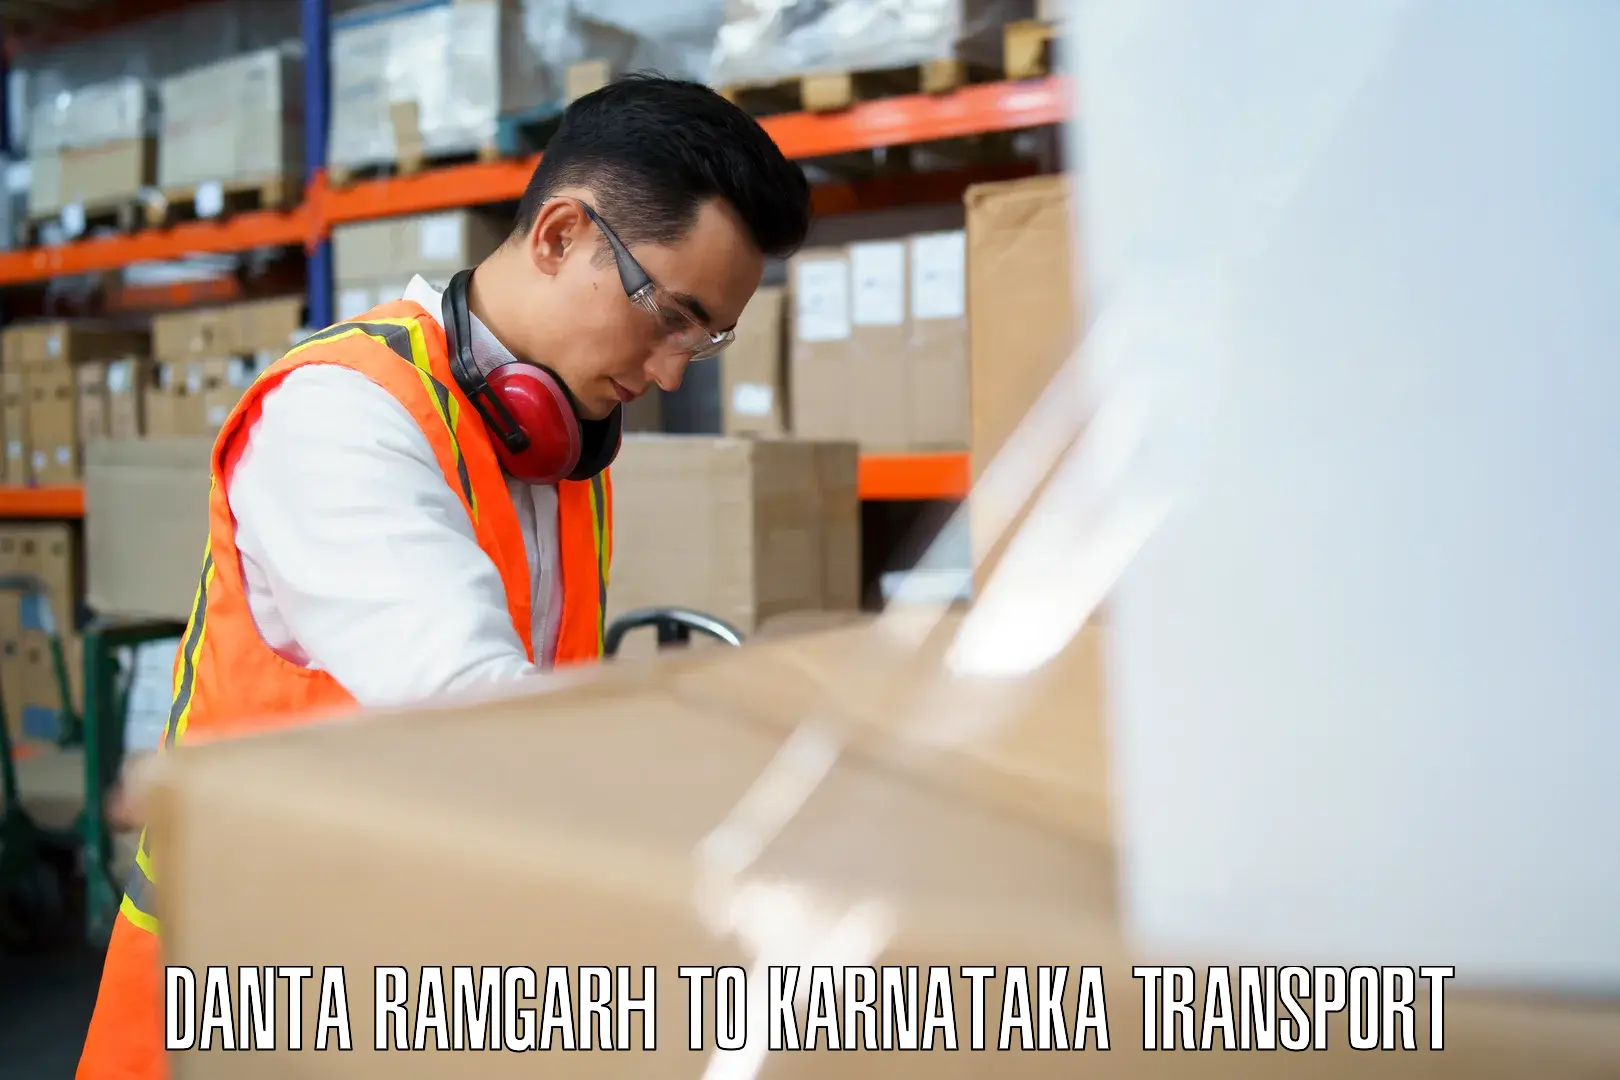 Shipping partner Danta Ramgarh to Basavana Bagewadi